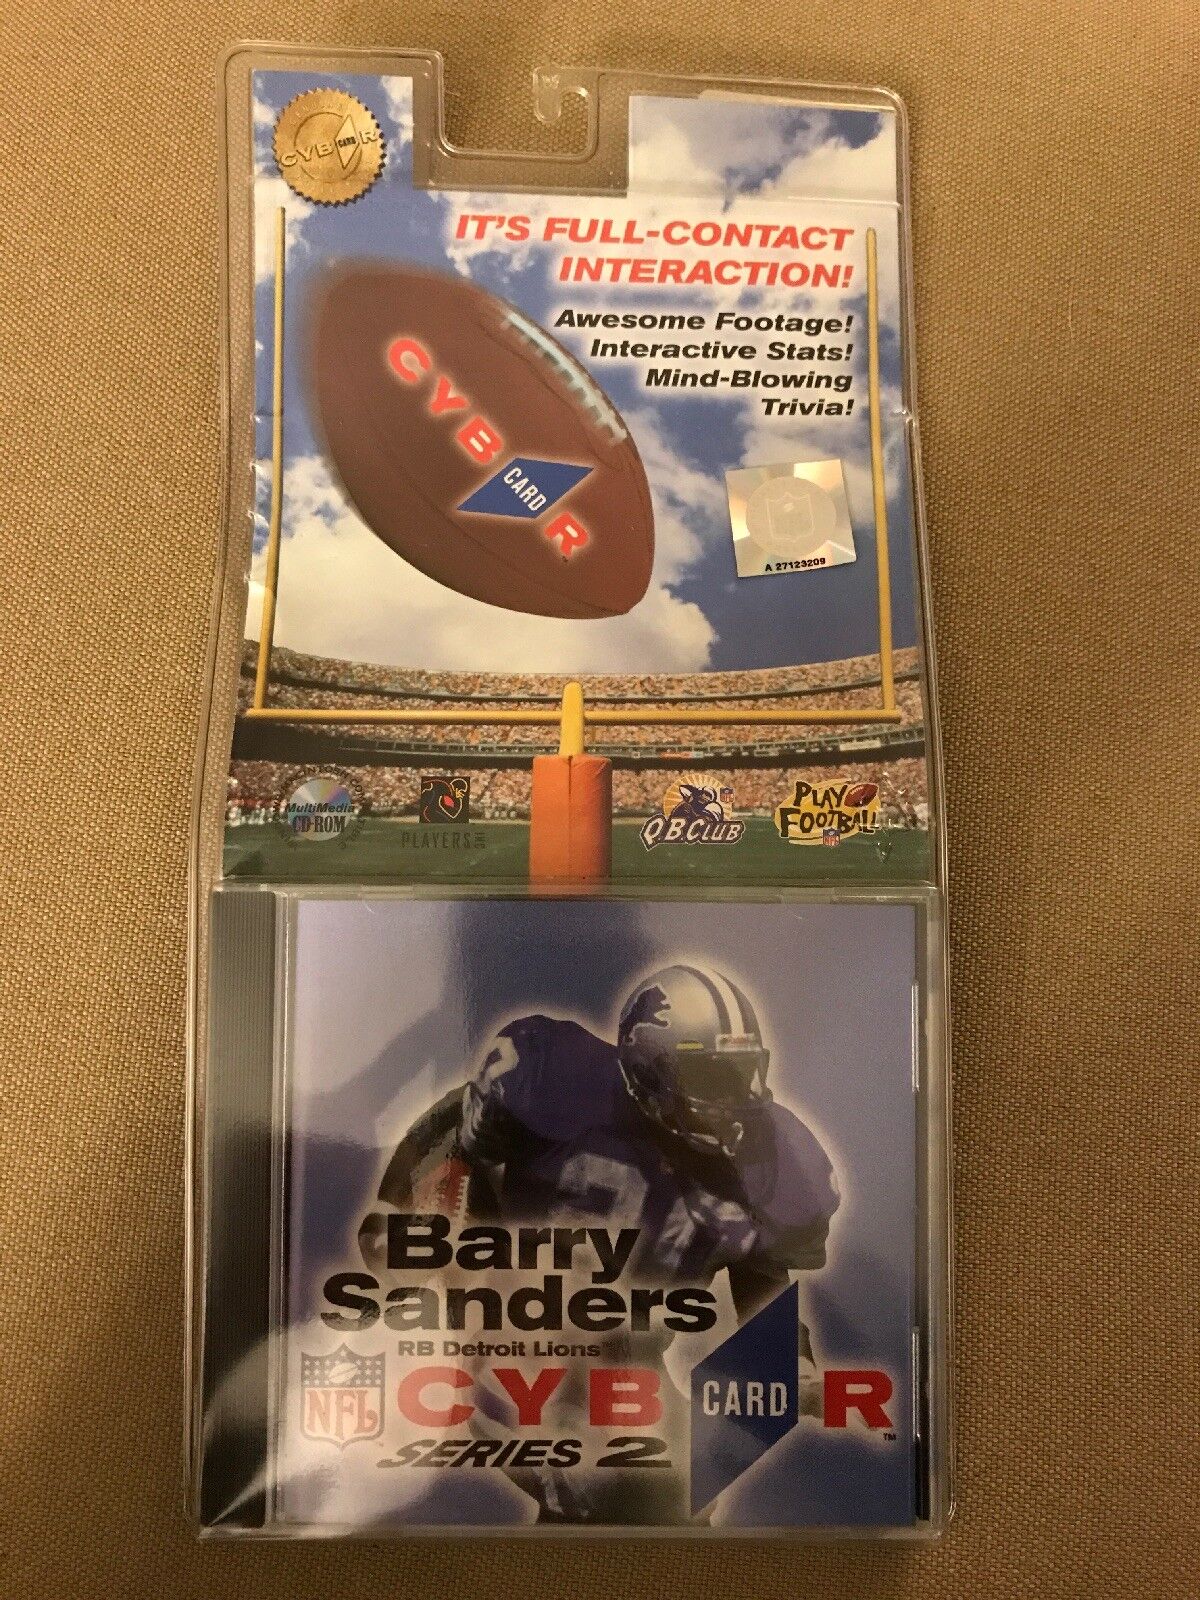 Rare New Barry Sanders Cyber Card Series 2 PC CD-ROM NFL Football Stats Trivia